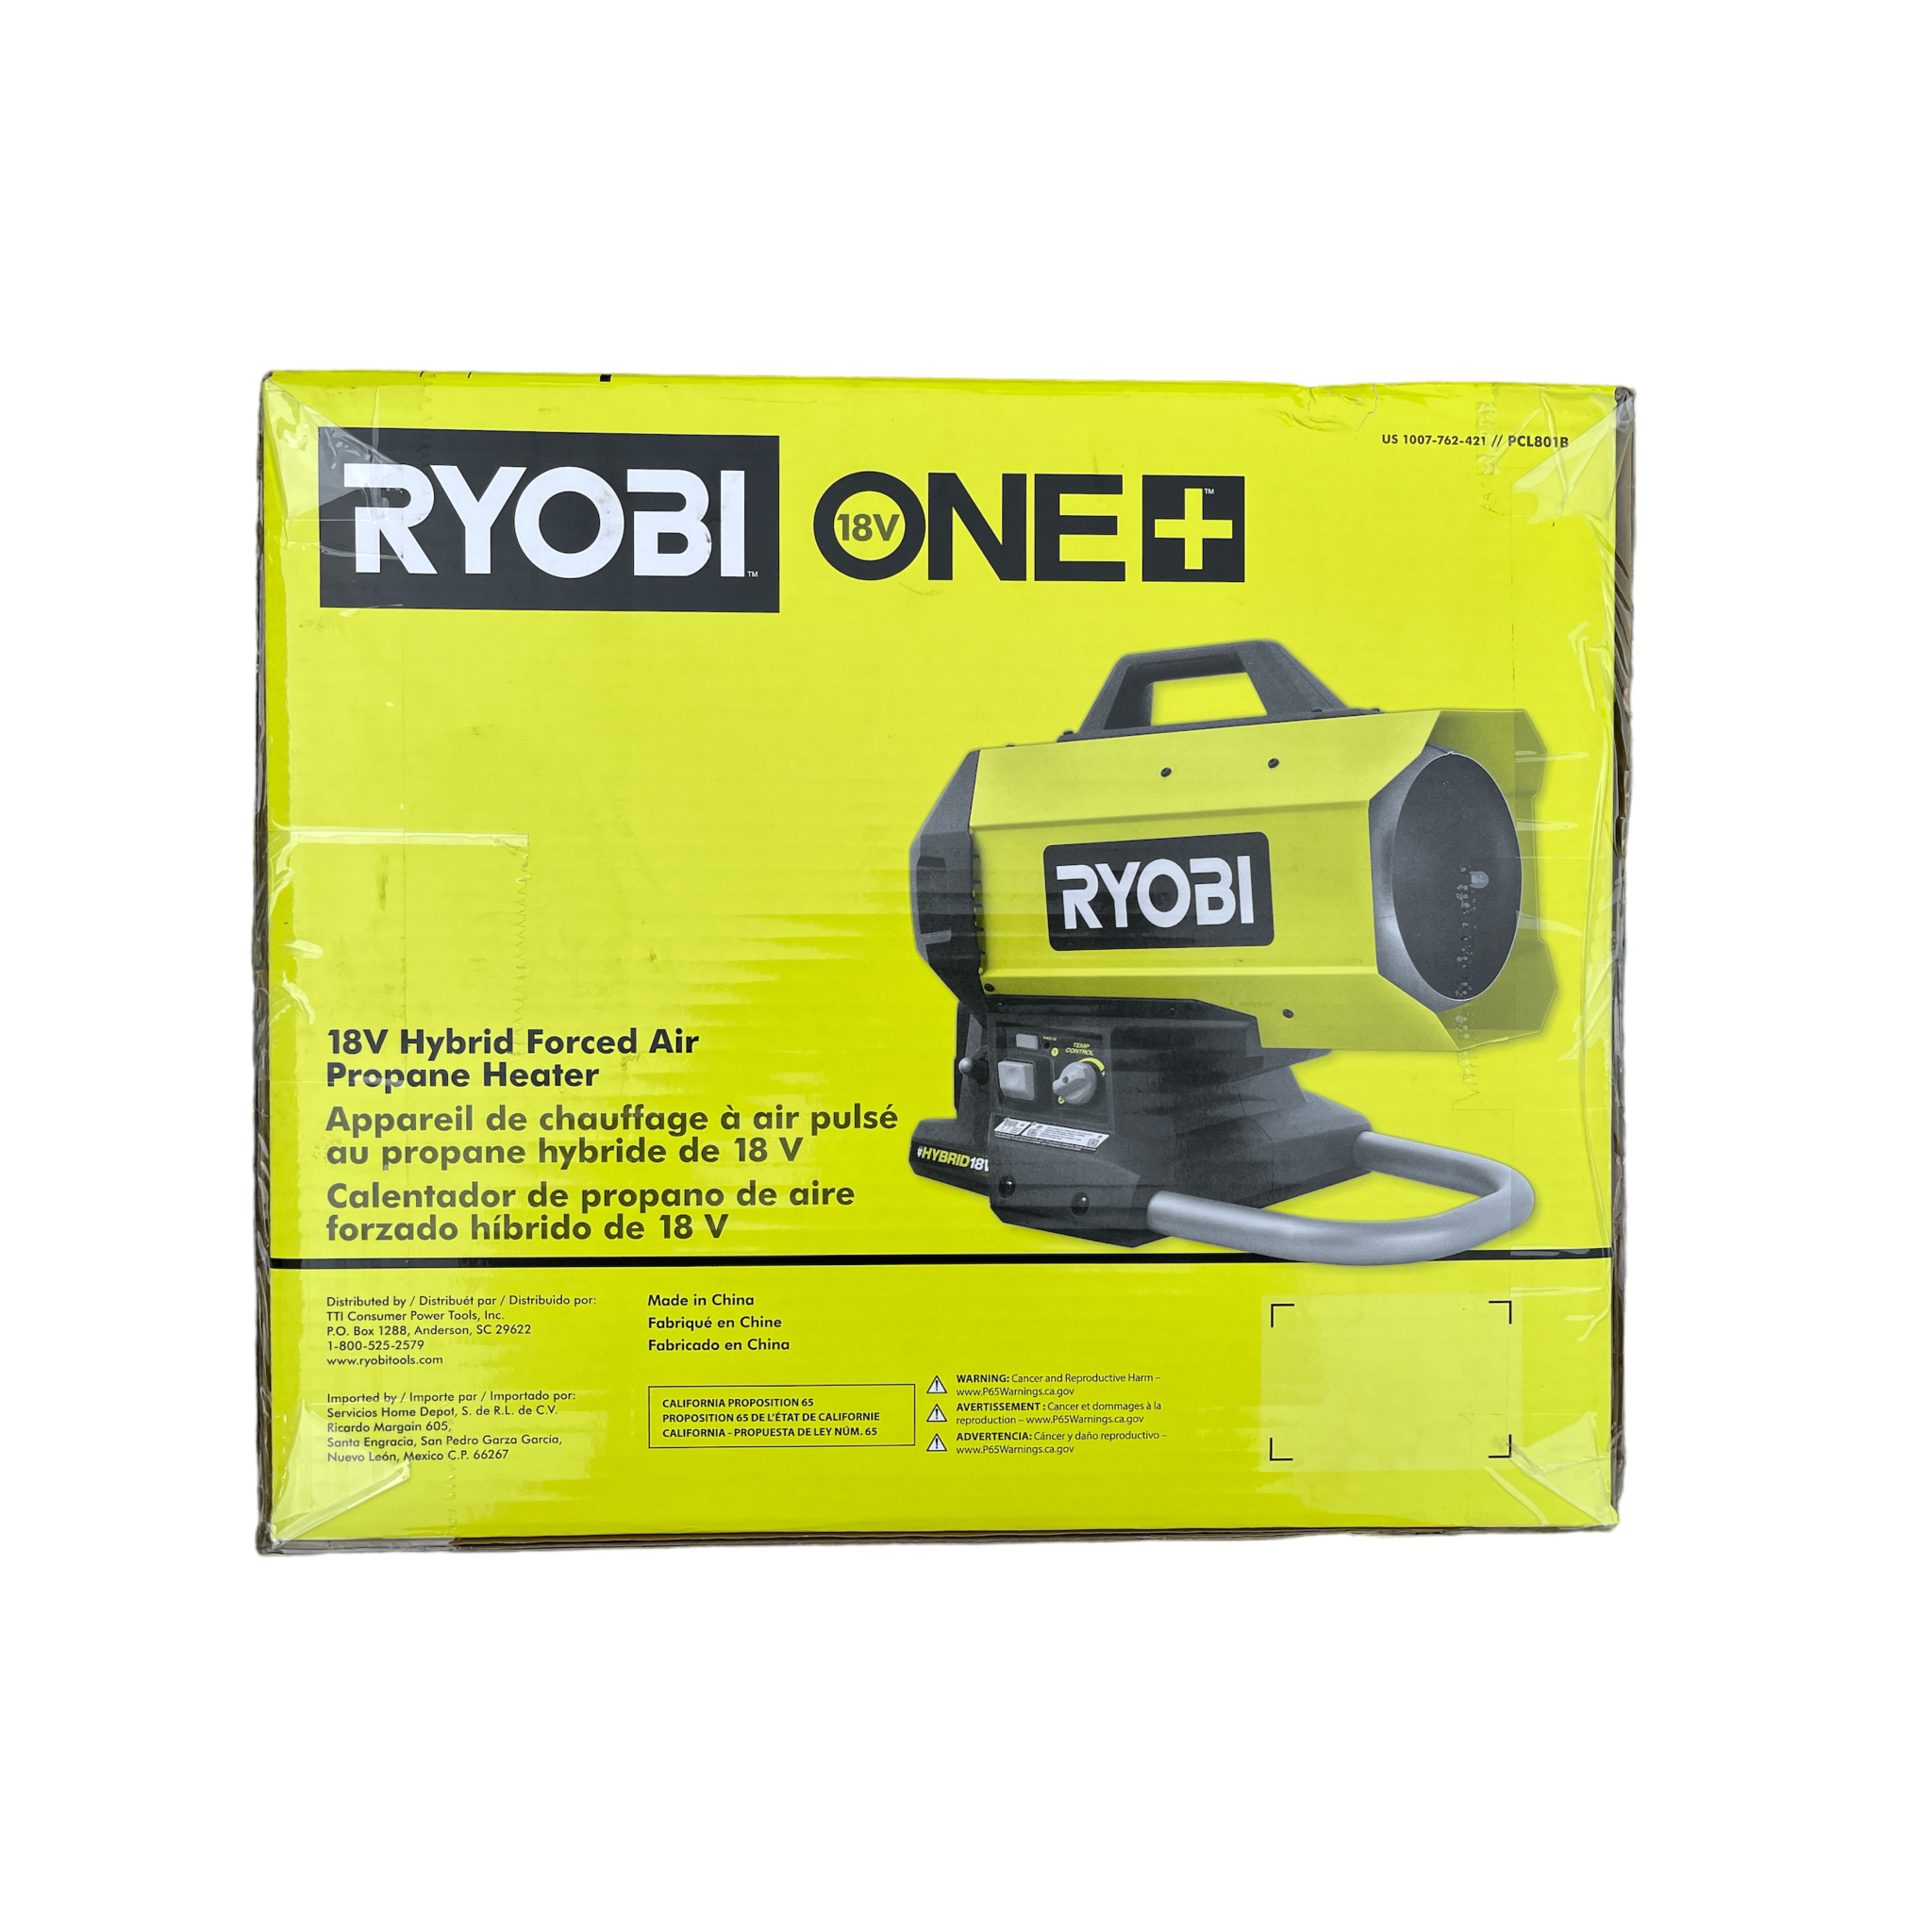 RYOBI ONE+ 18V Cordless Hybrid Forced Air Propane Heater (Tool Only), AllSurplus